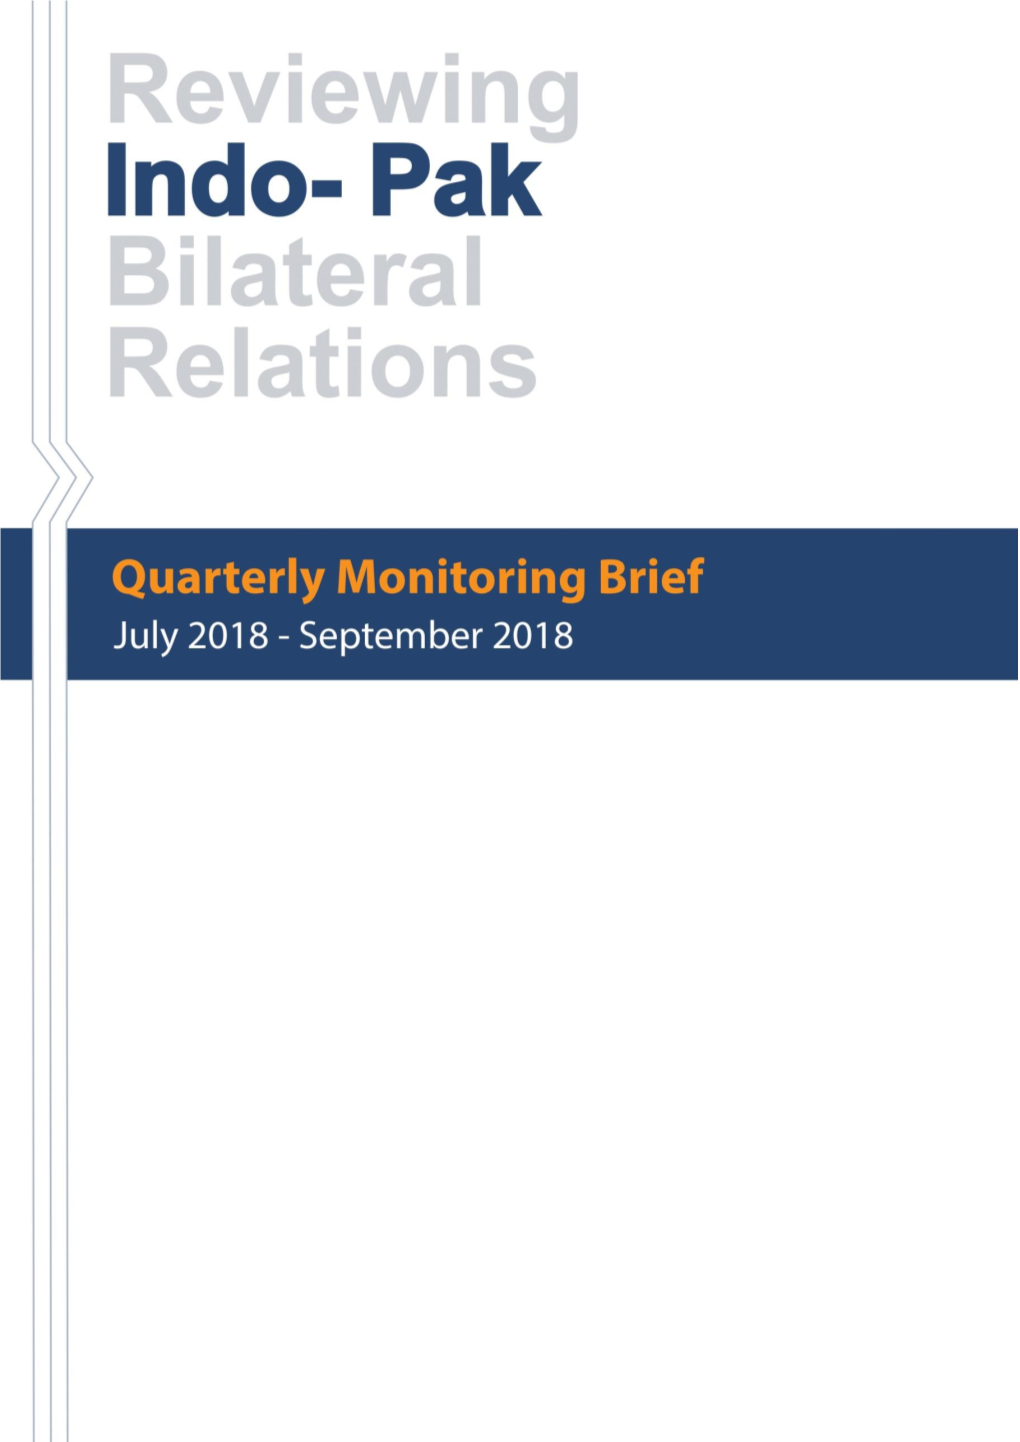 Indo-Pak Quarterly Monitoring Brief July 2018-September 2018